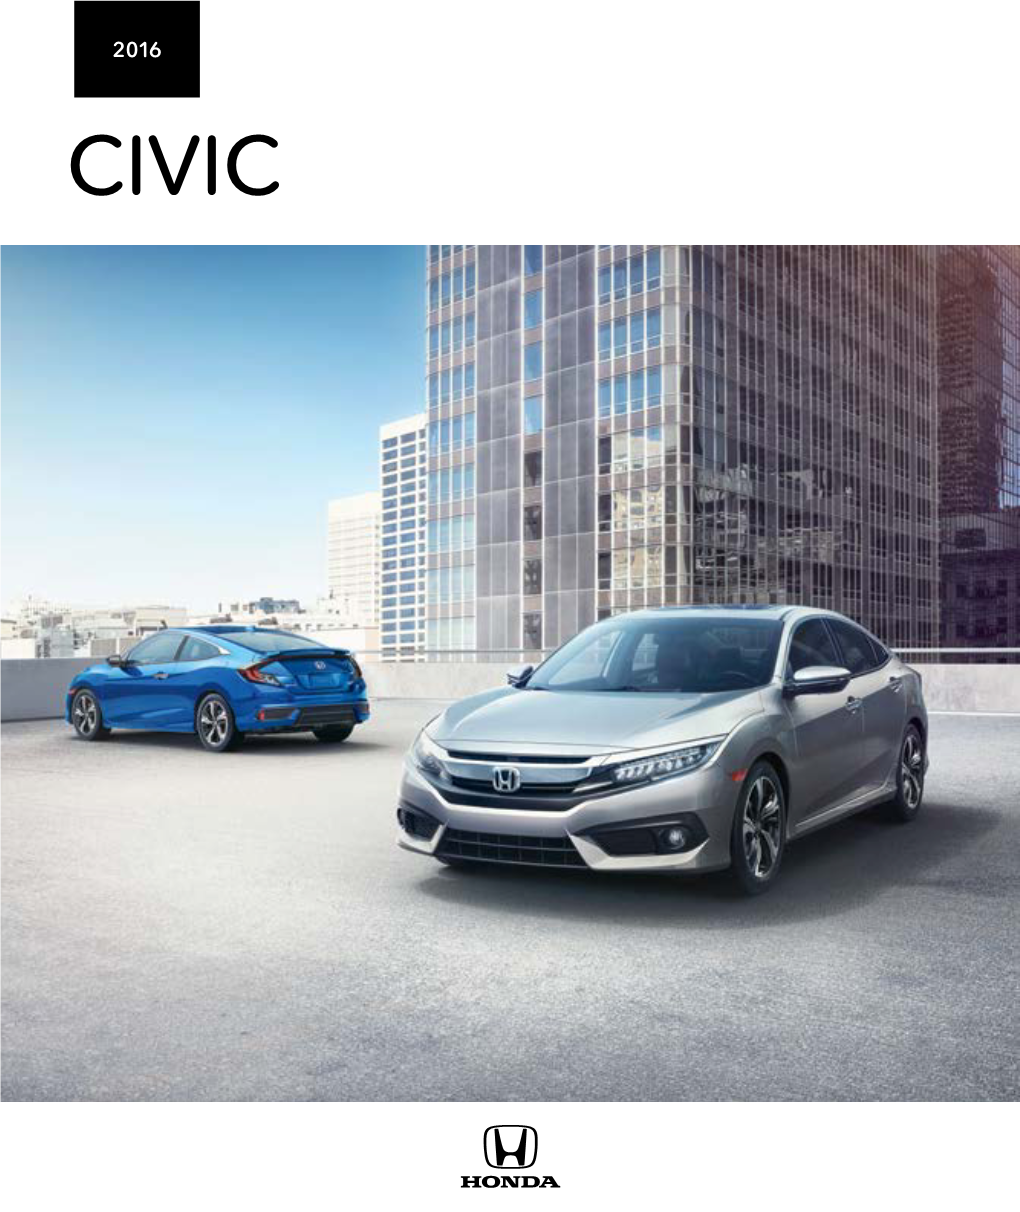 2016 Civic Sedan Brochure